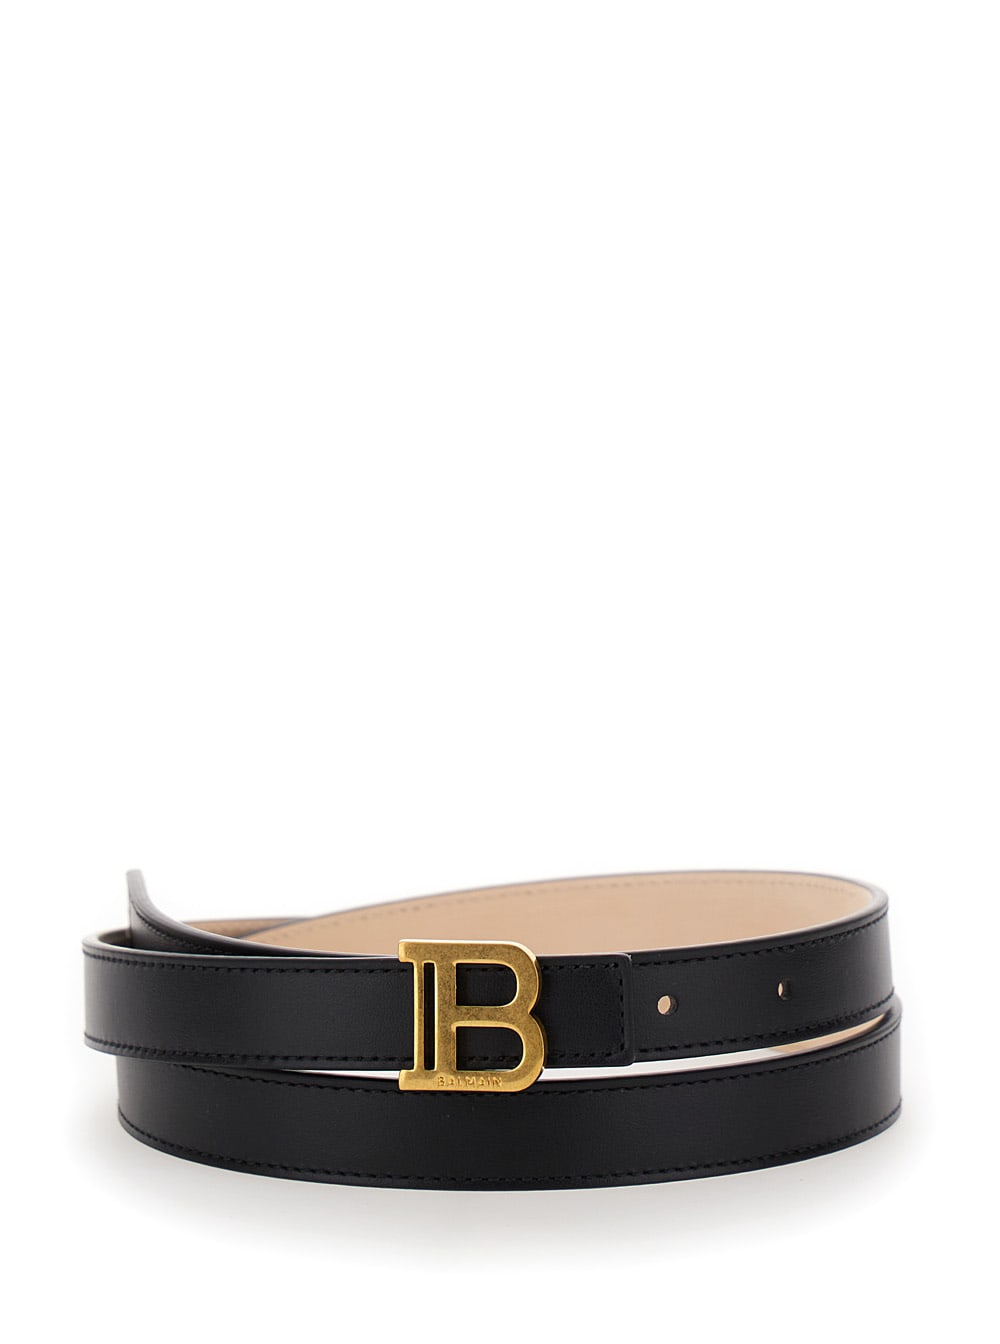 Balmain B Belt Black Belt With B Buckle In Leather Woman